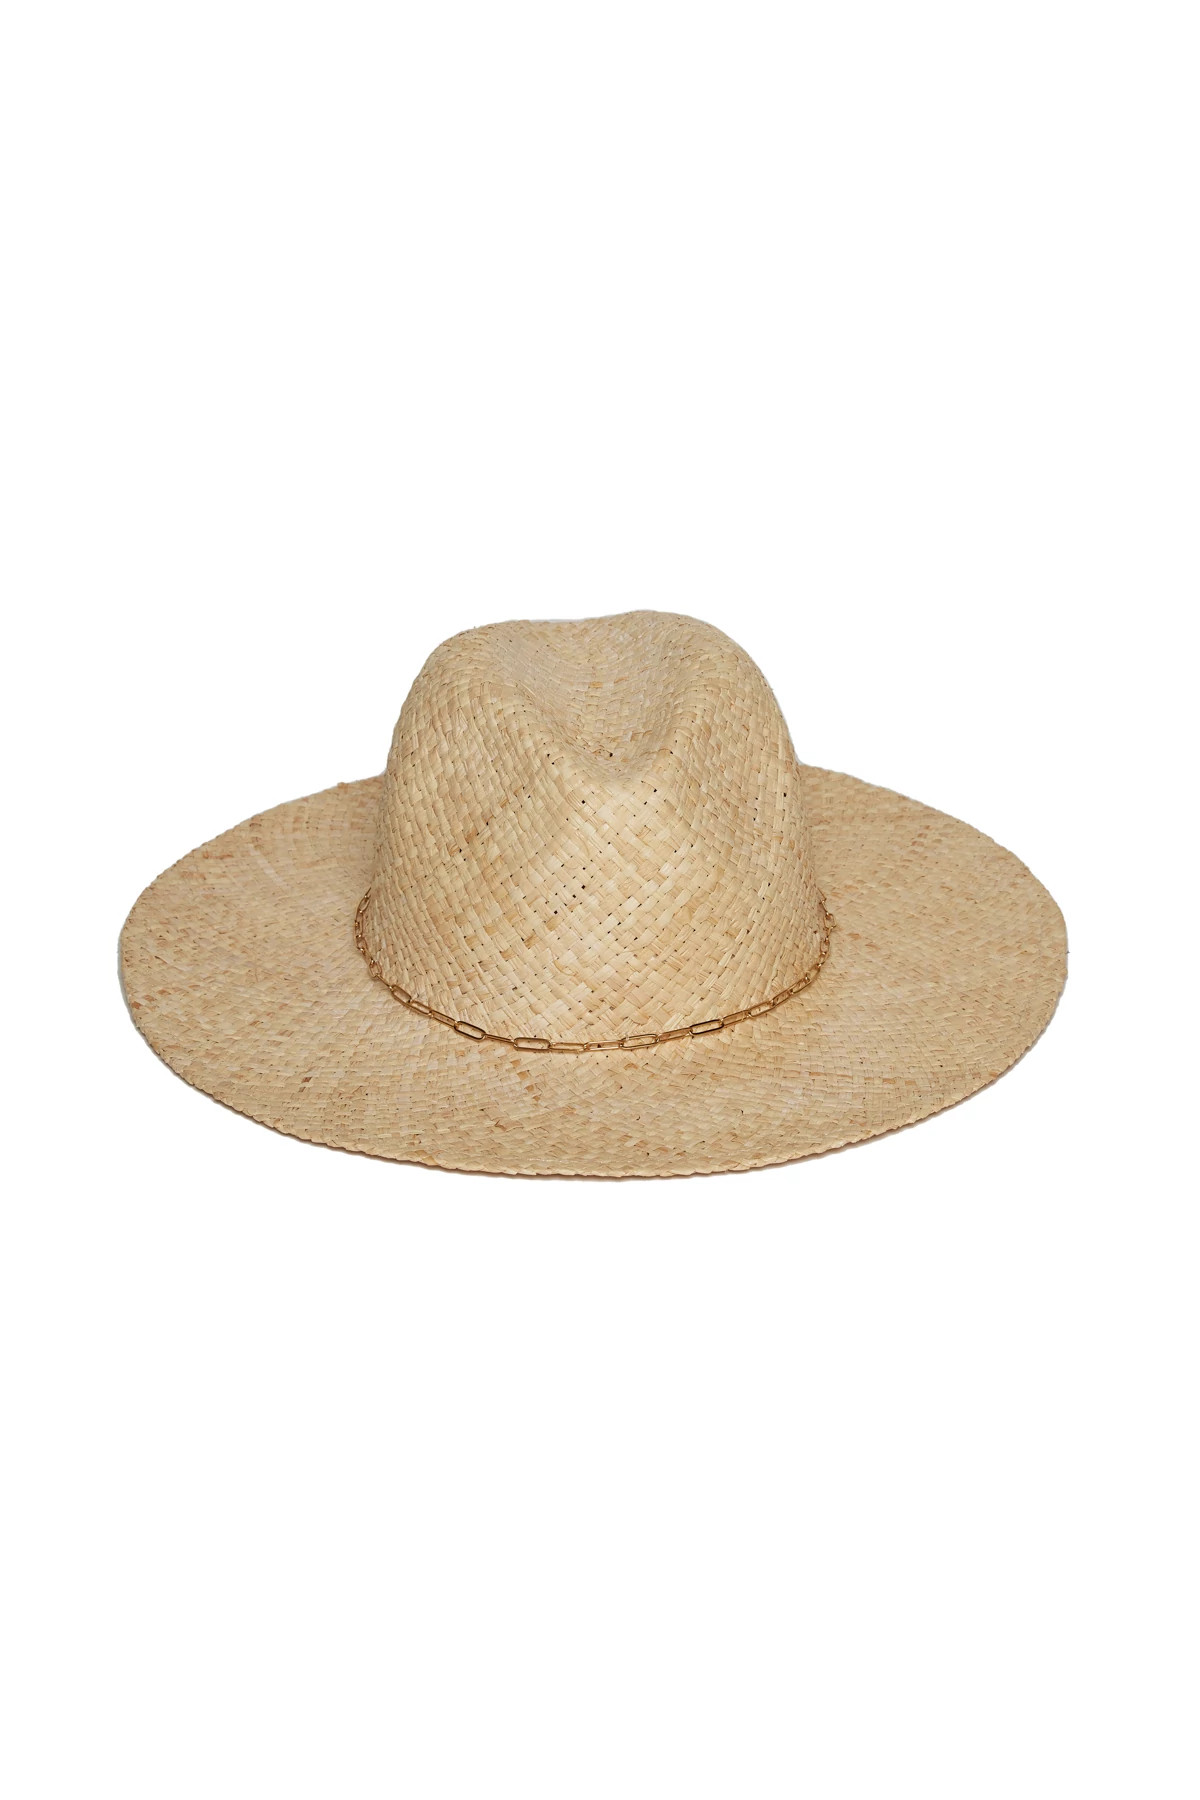 NATURAL Quinn Rancher Hat image number 1